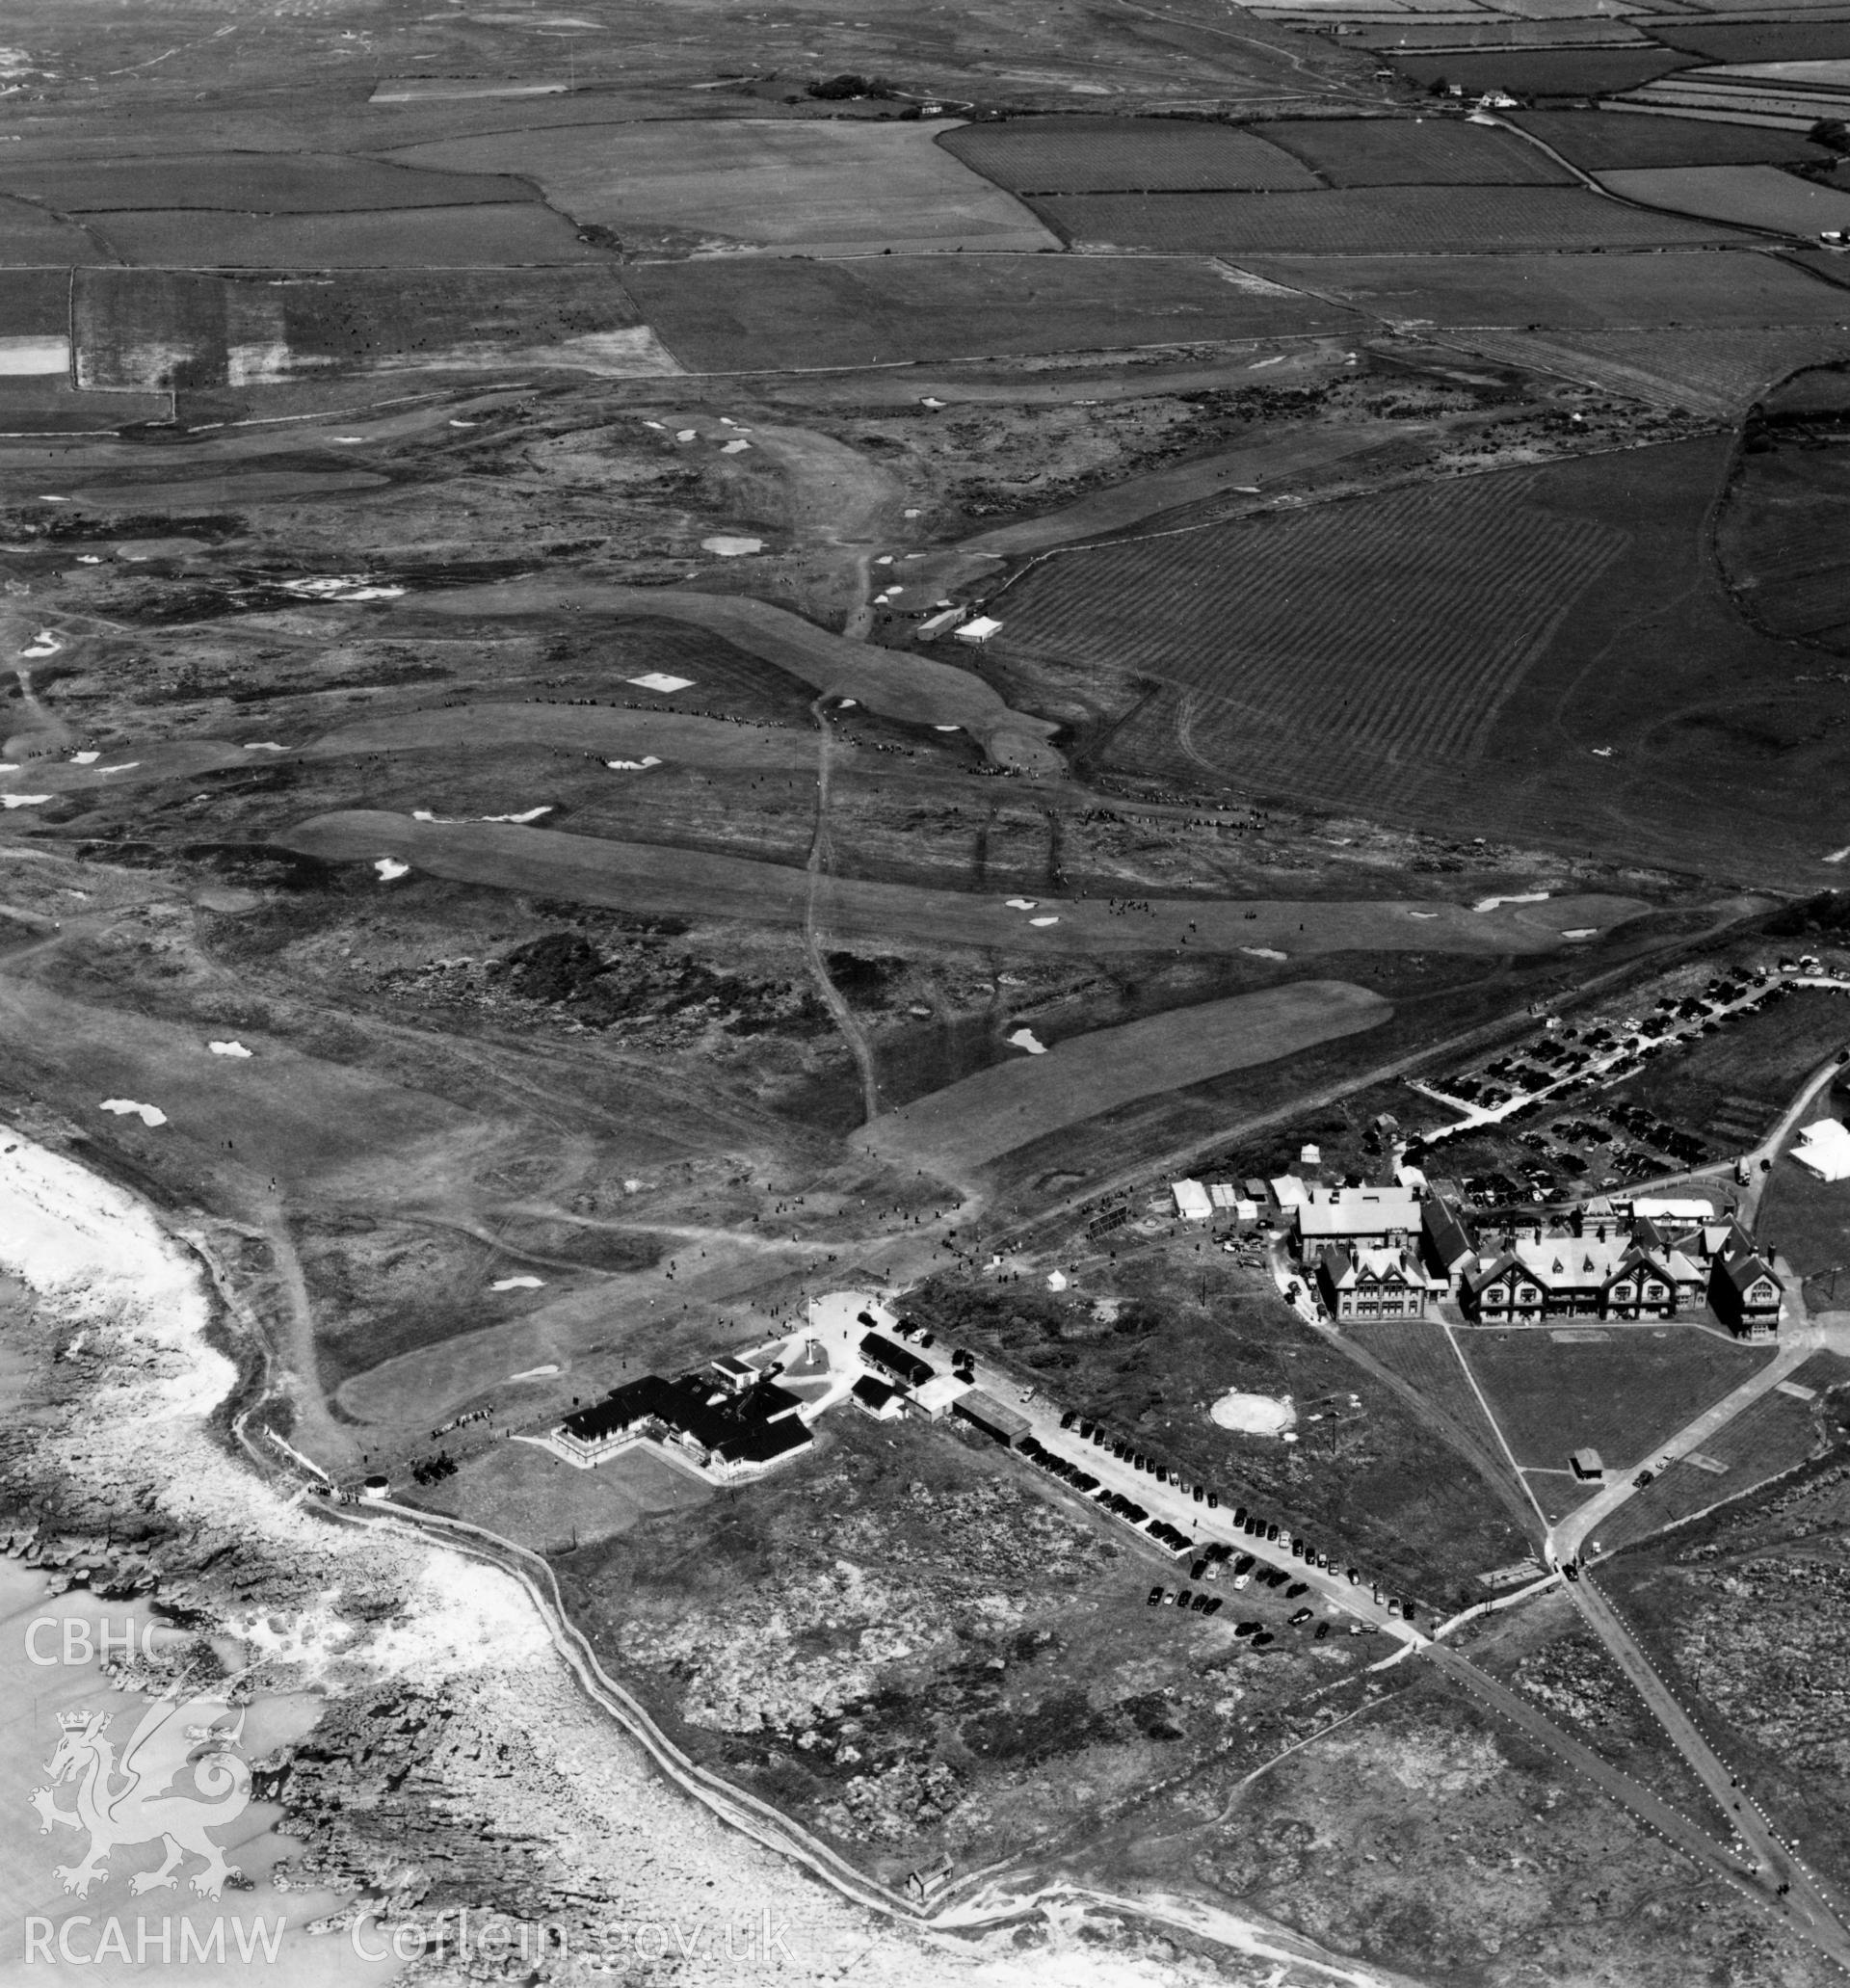 View of Royal Porthcawl golf club. Oblique aerial photograph, 5?" cut roll film.